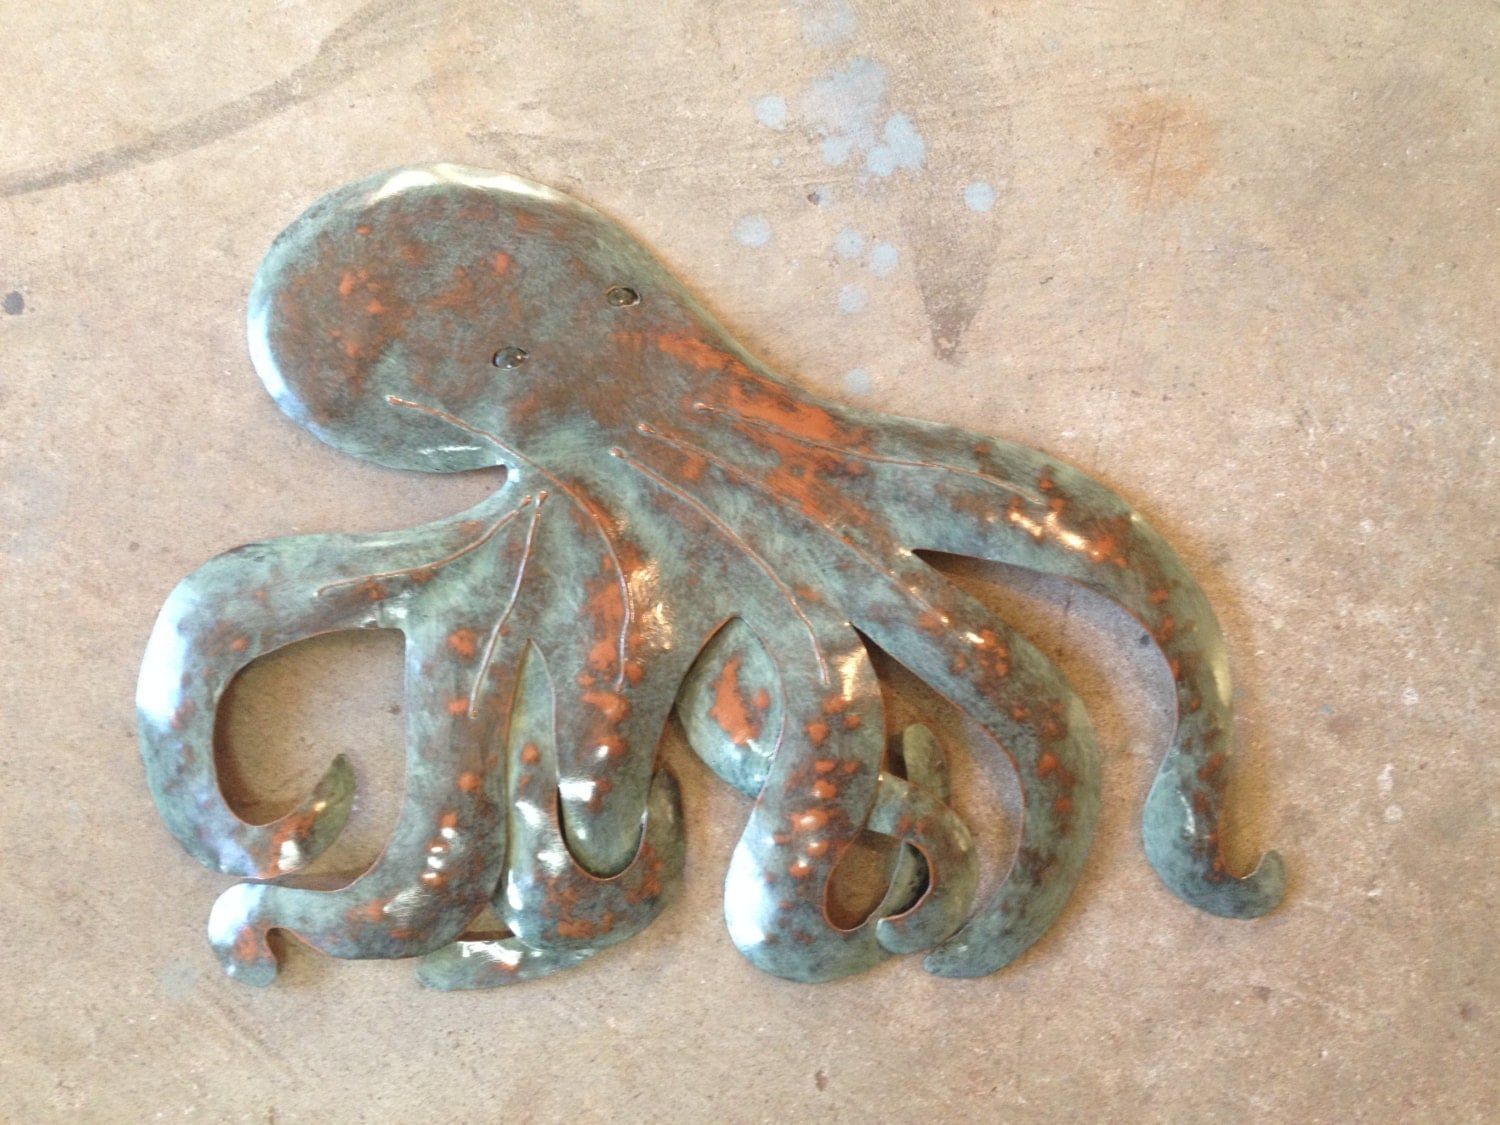 Octopus Metal Art Wall Sculpture Tropicalsallenbachfishart Regarding Most Up To Date Octopus Metal Wall Sculptures (View 8 of 20)